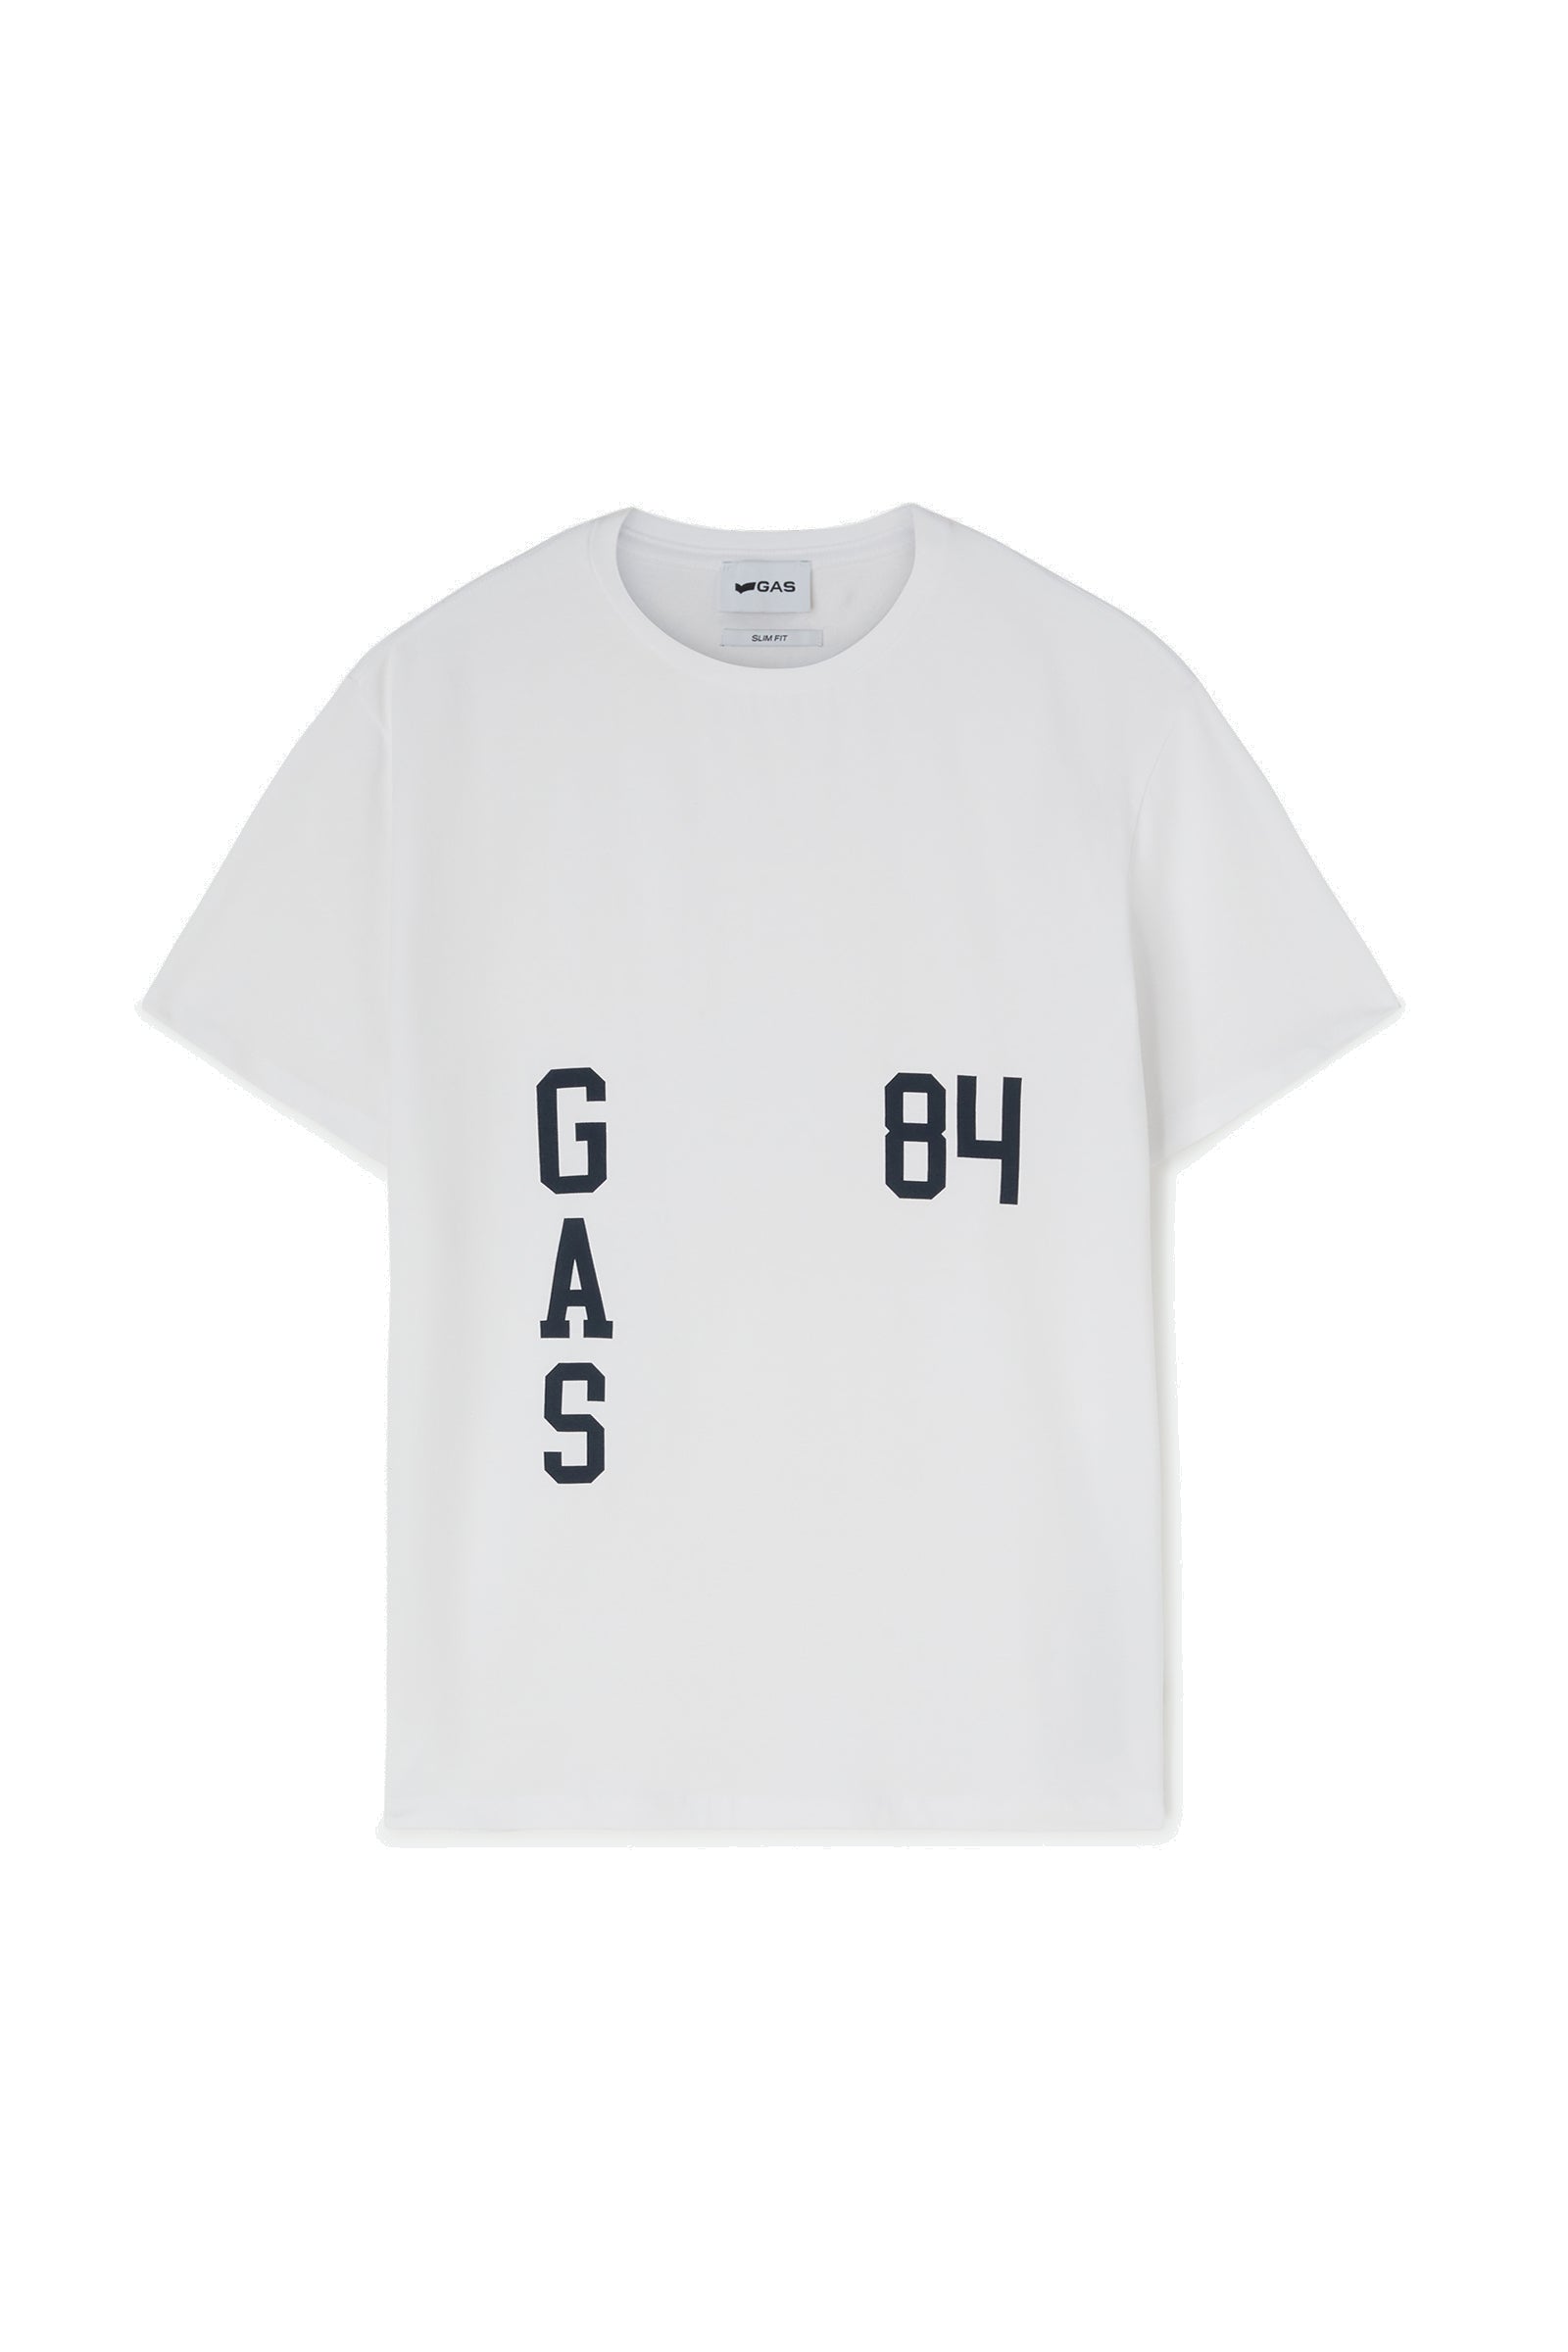 Scuba/S Brand G84 T-Shirt in White T-Shirts GAS   